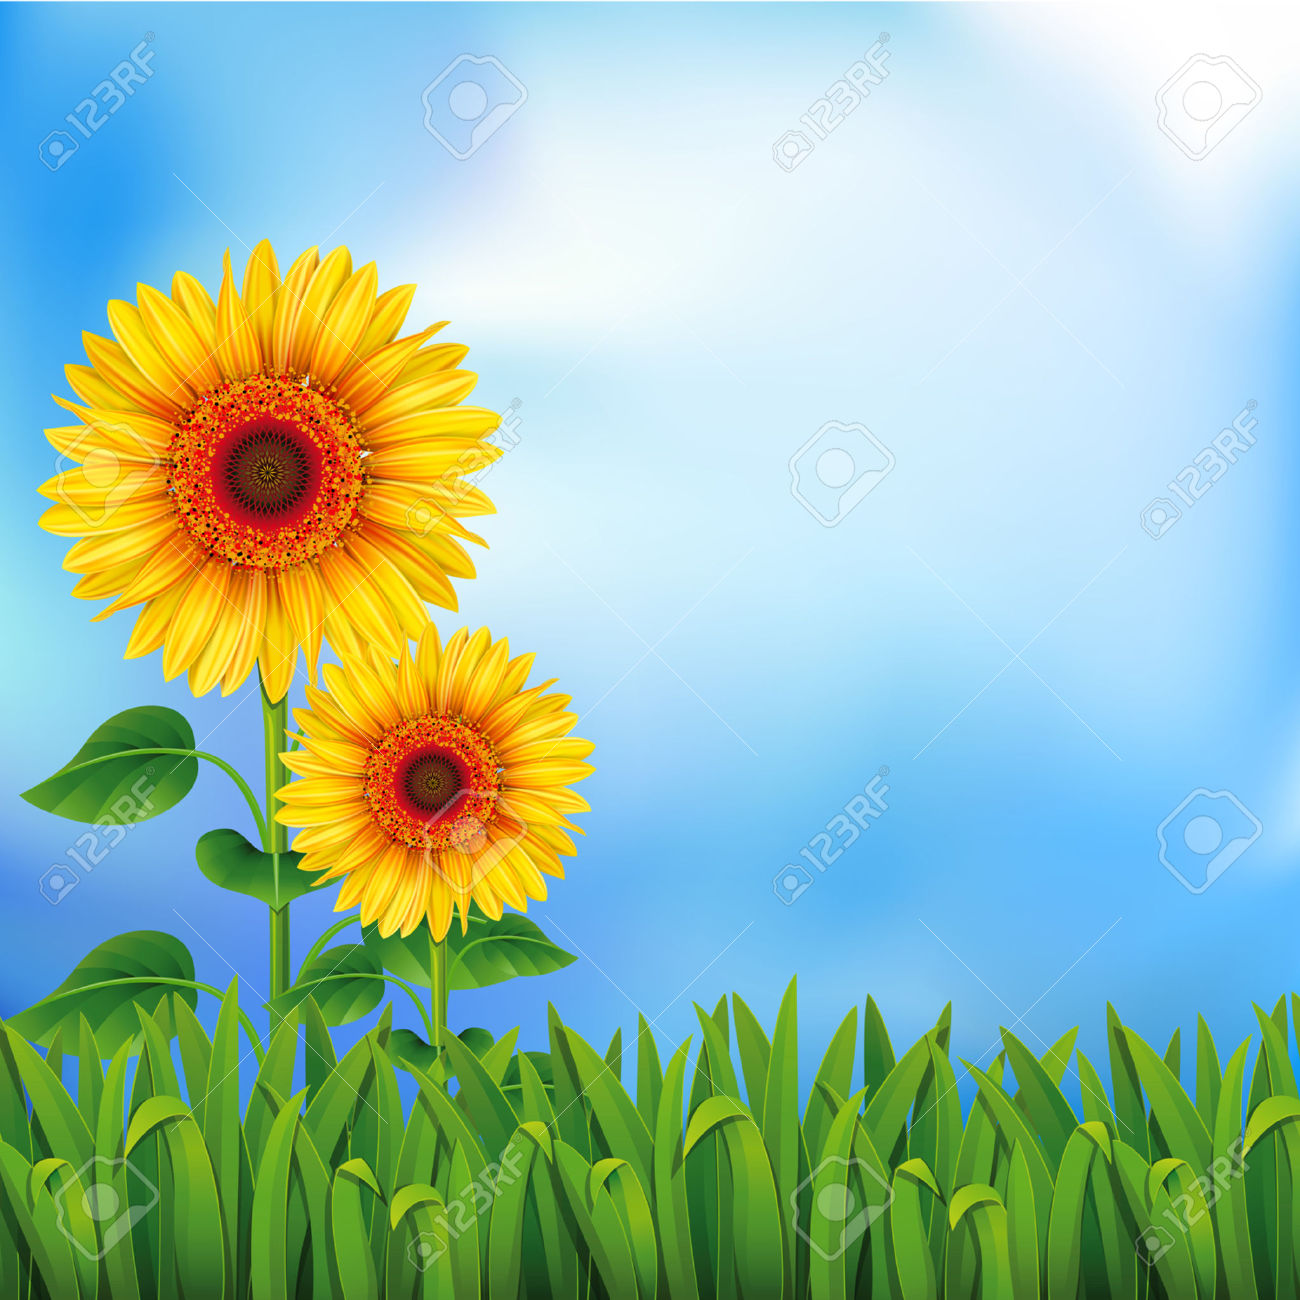 sunflower clip art free download - photo #37